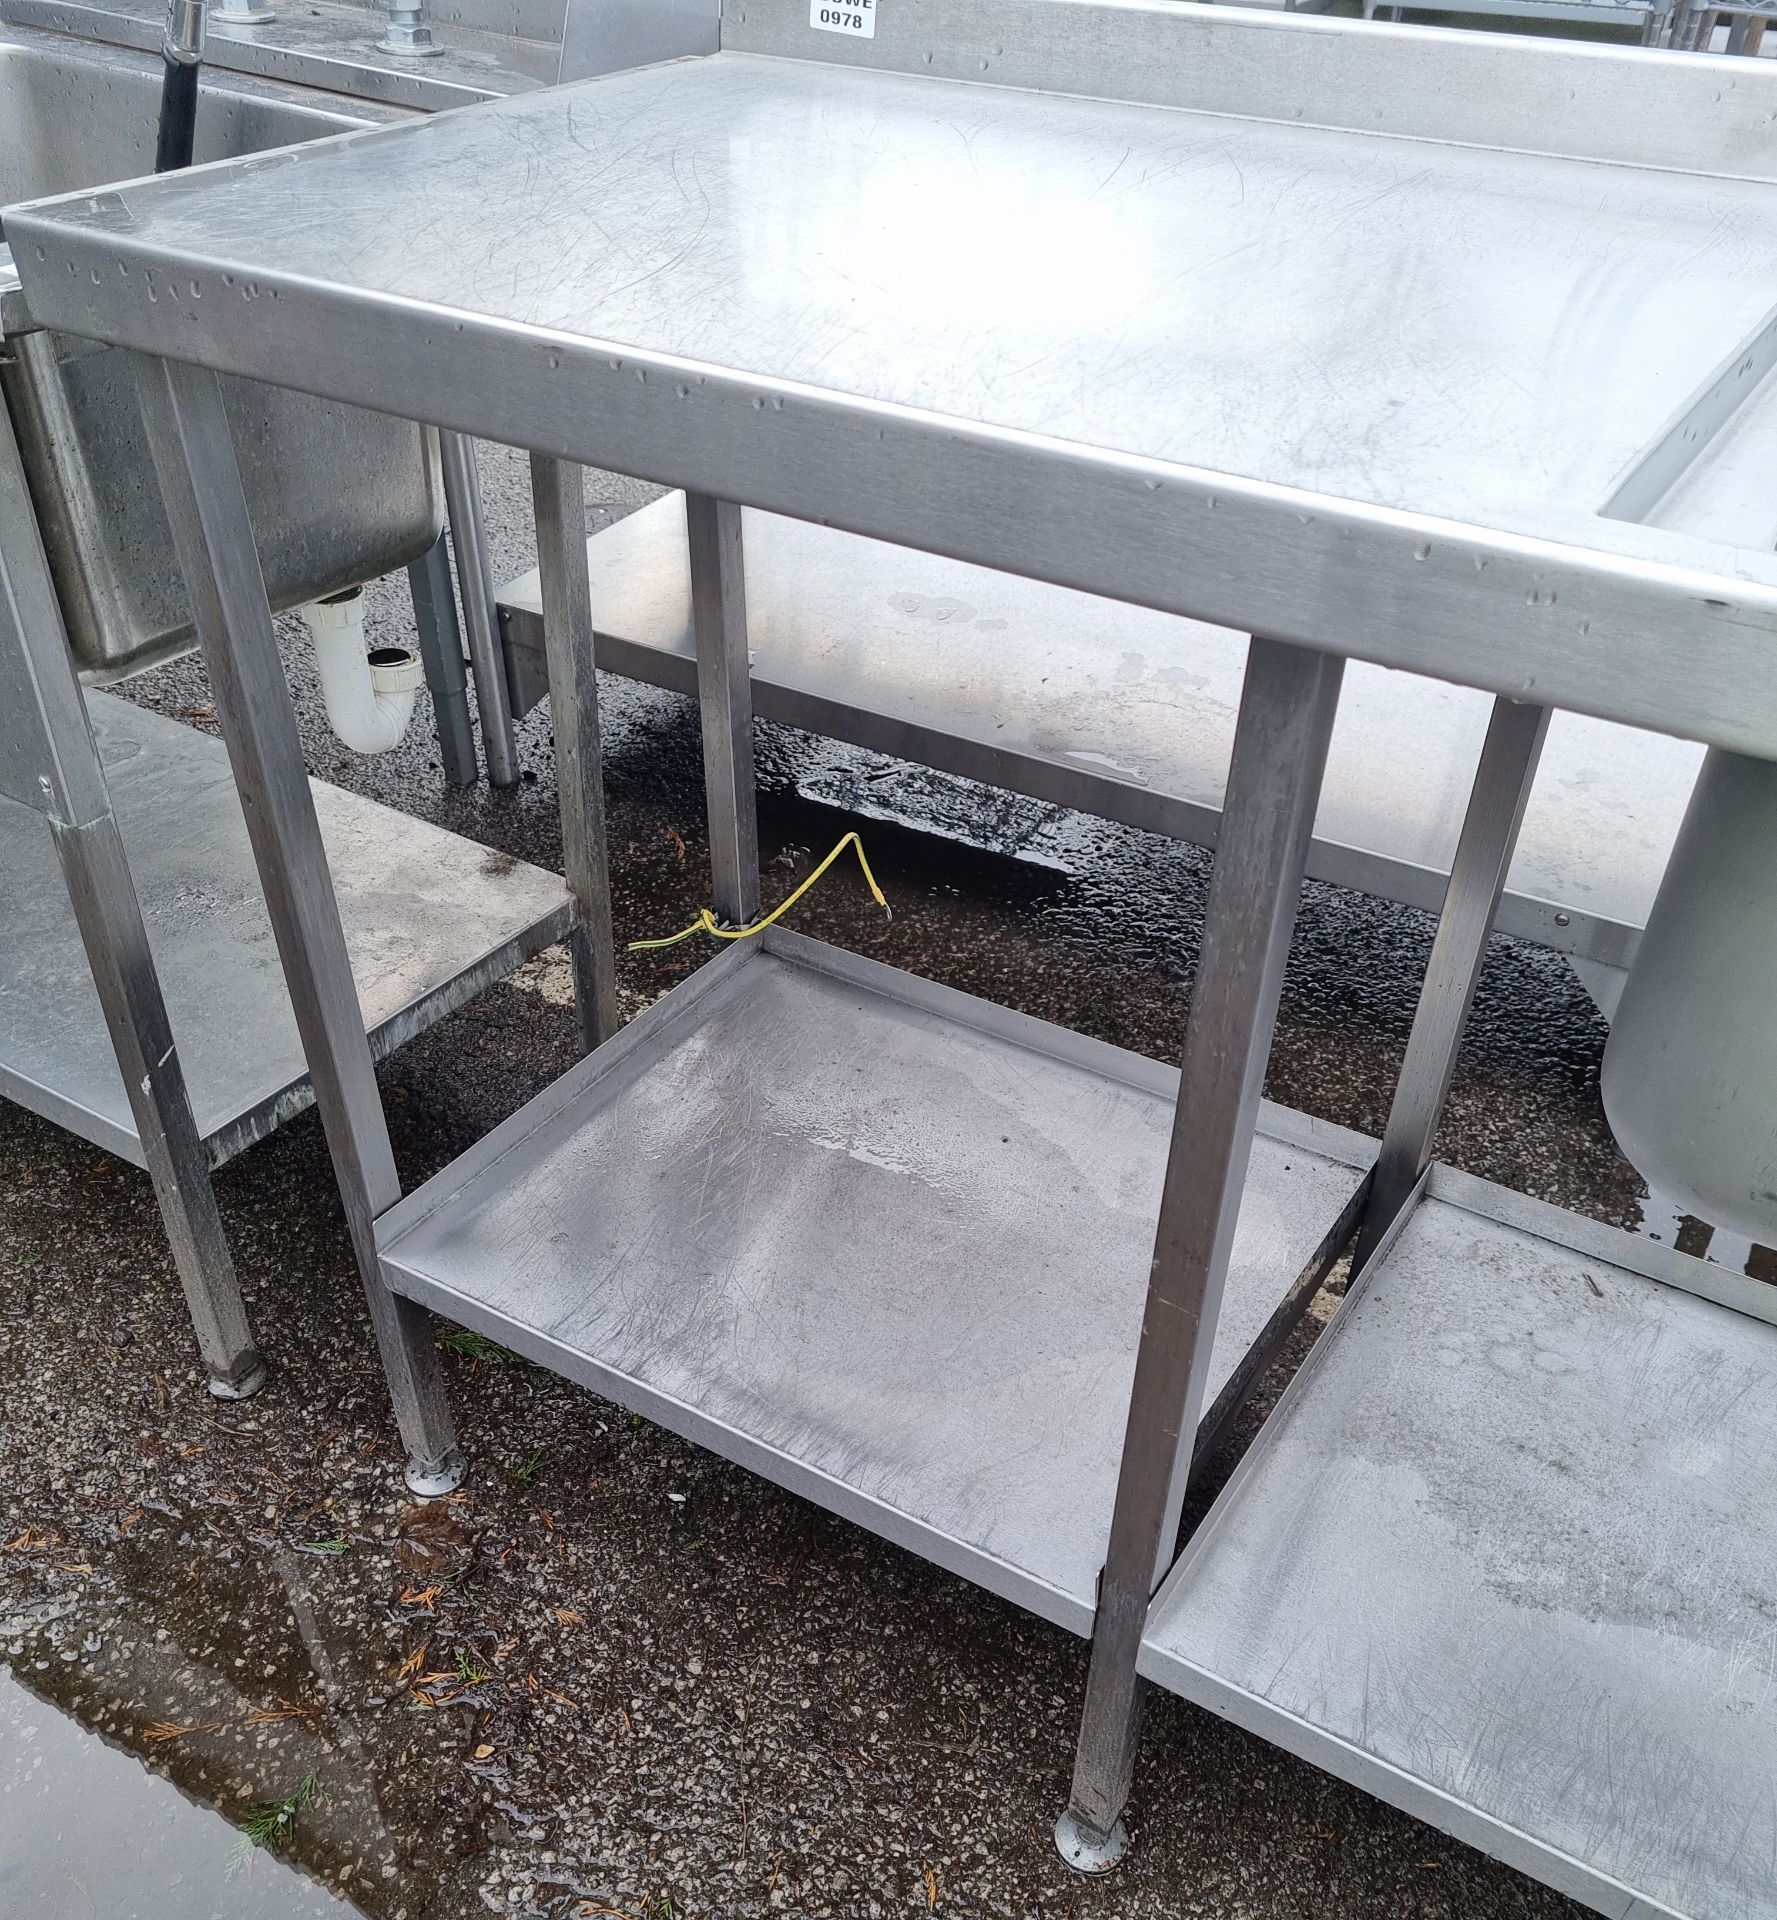 Stainless steel preparation table with sink - 203 x 62 x 108cm - Bild 3 aus 3